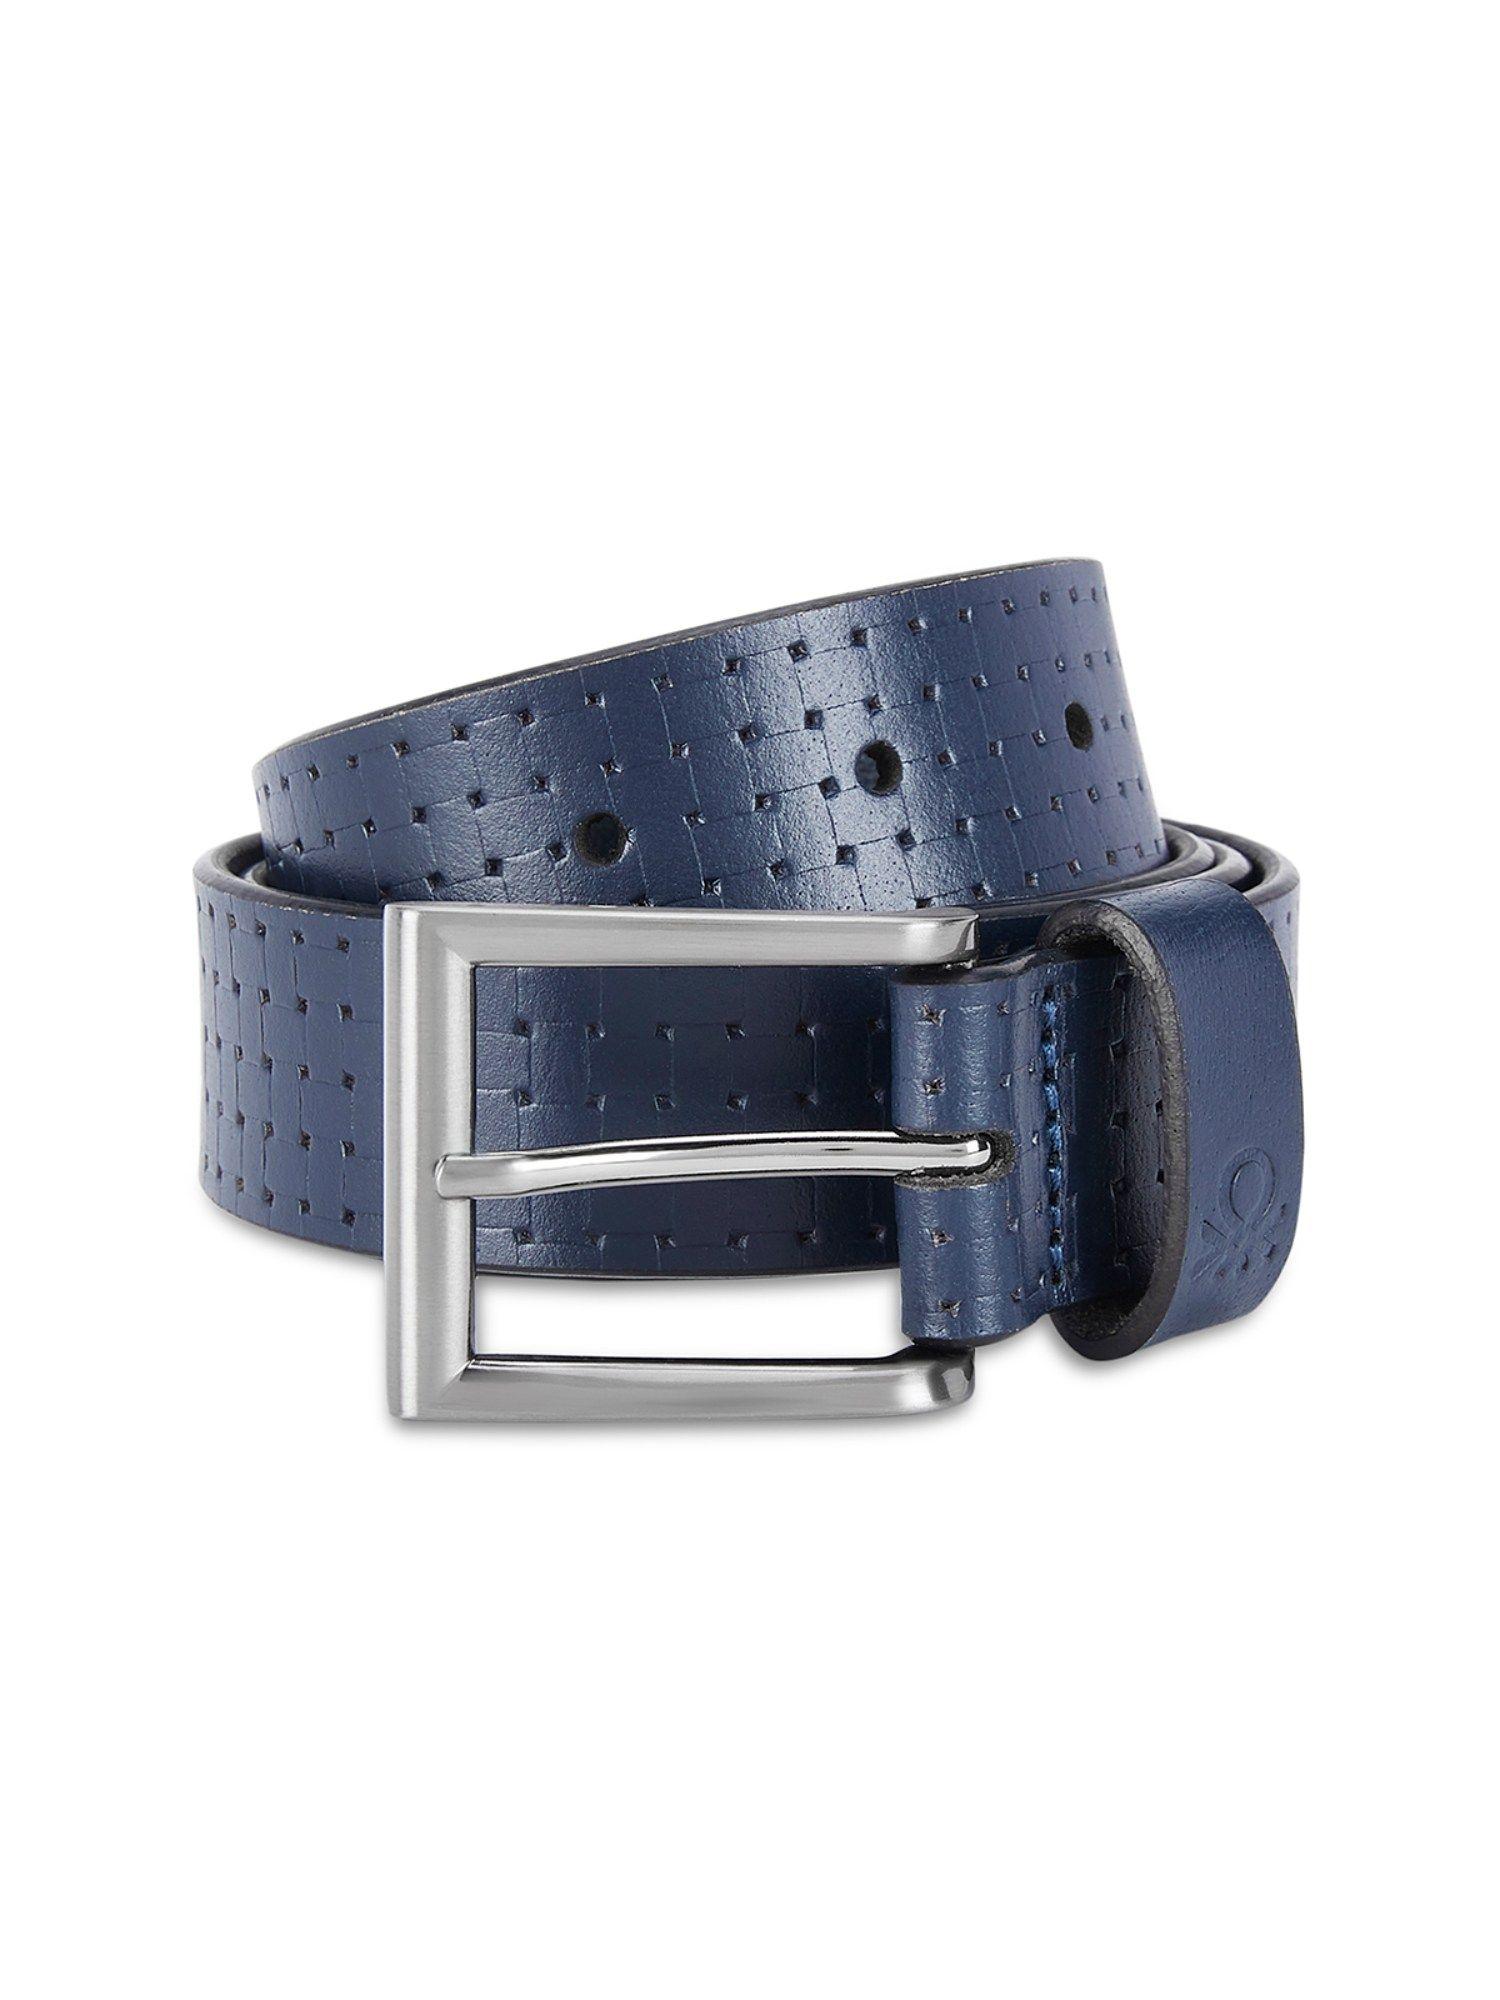 stilaro men leather belt - navy blue